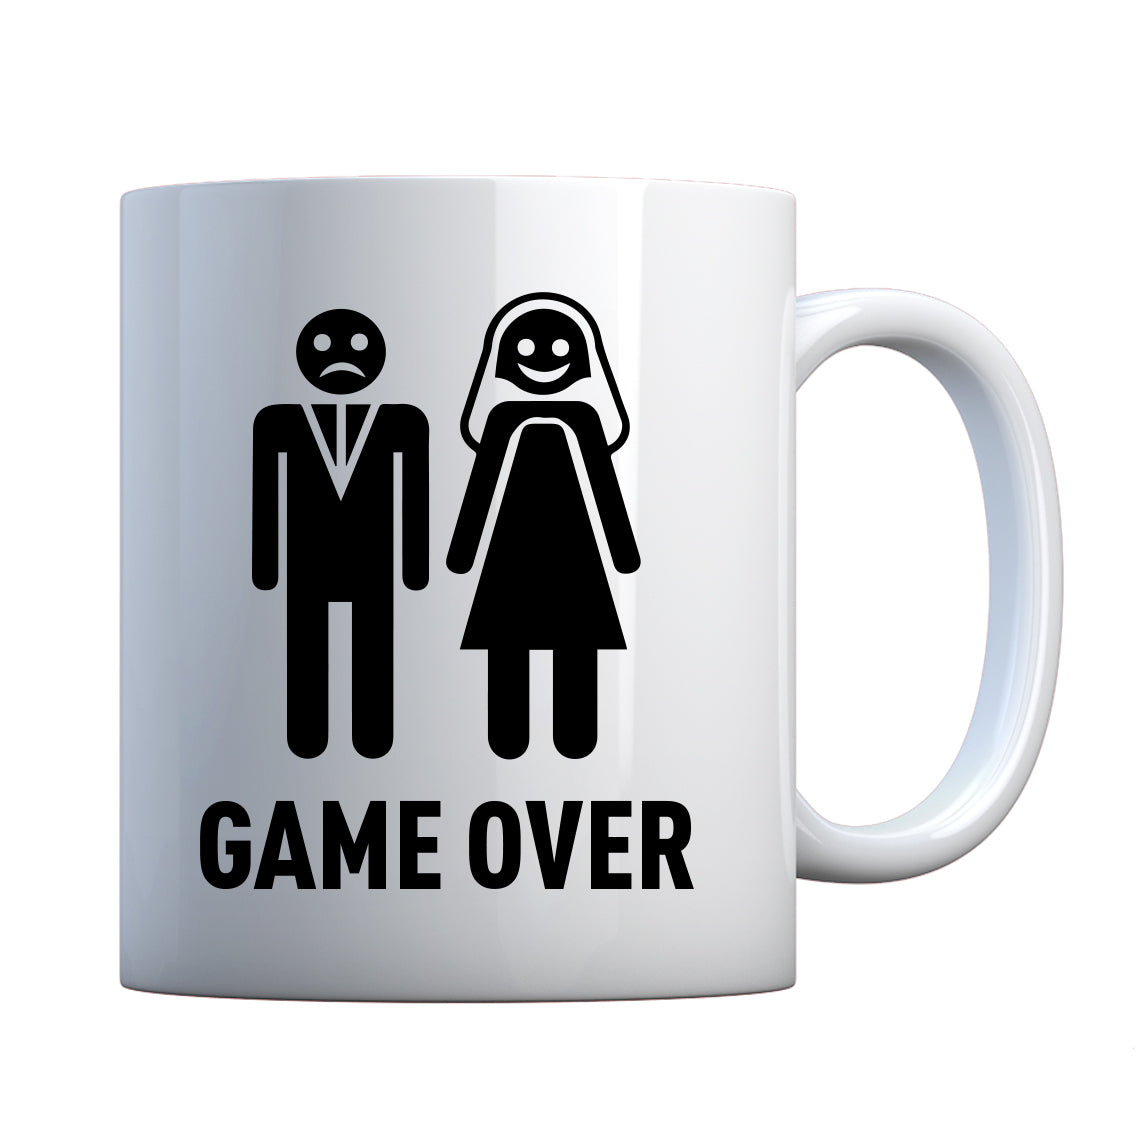 Game Over Ceramic Gift Mug